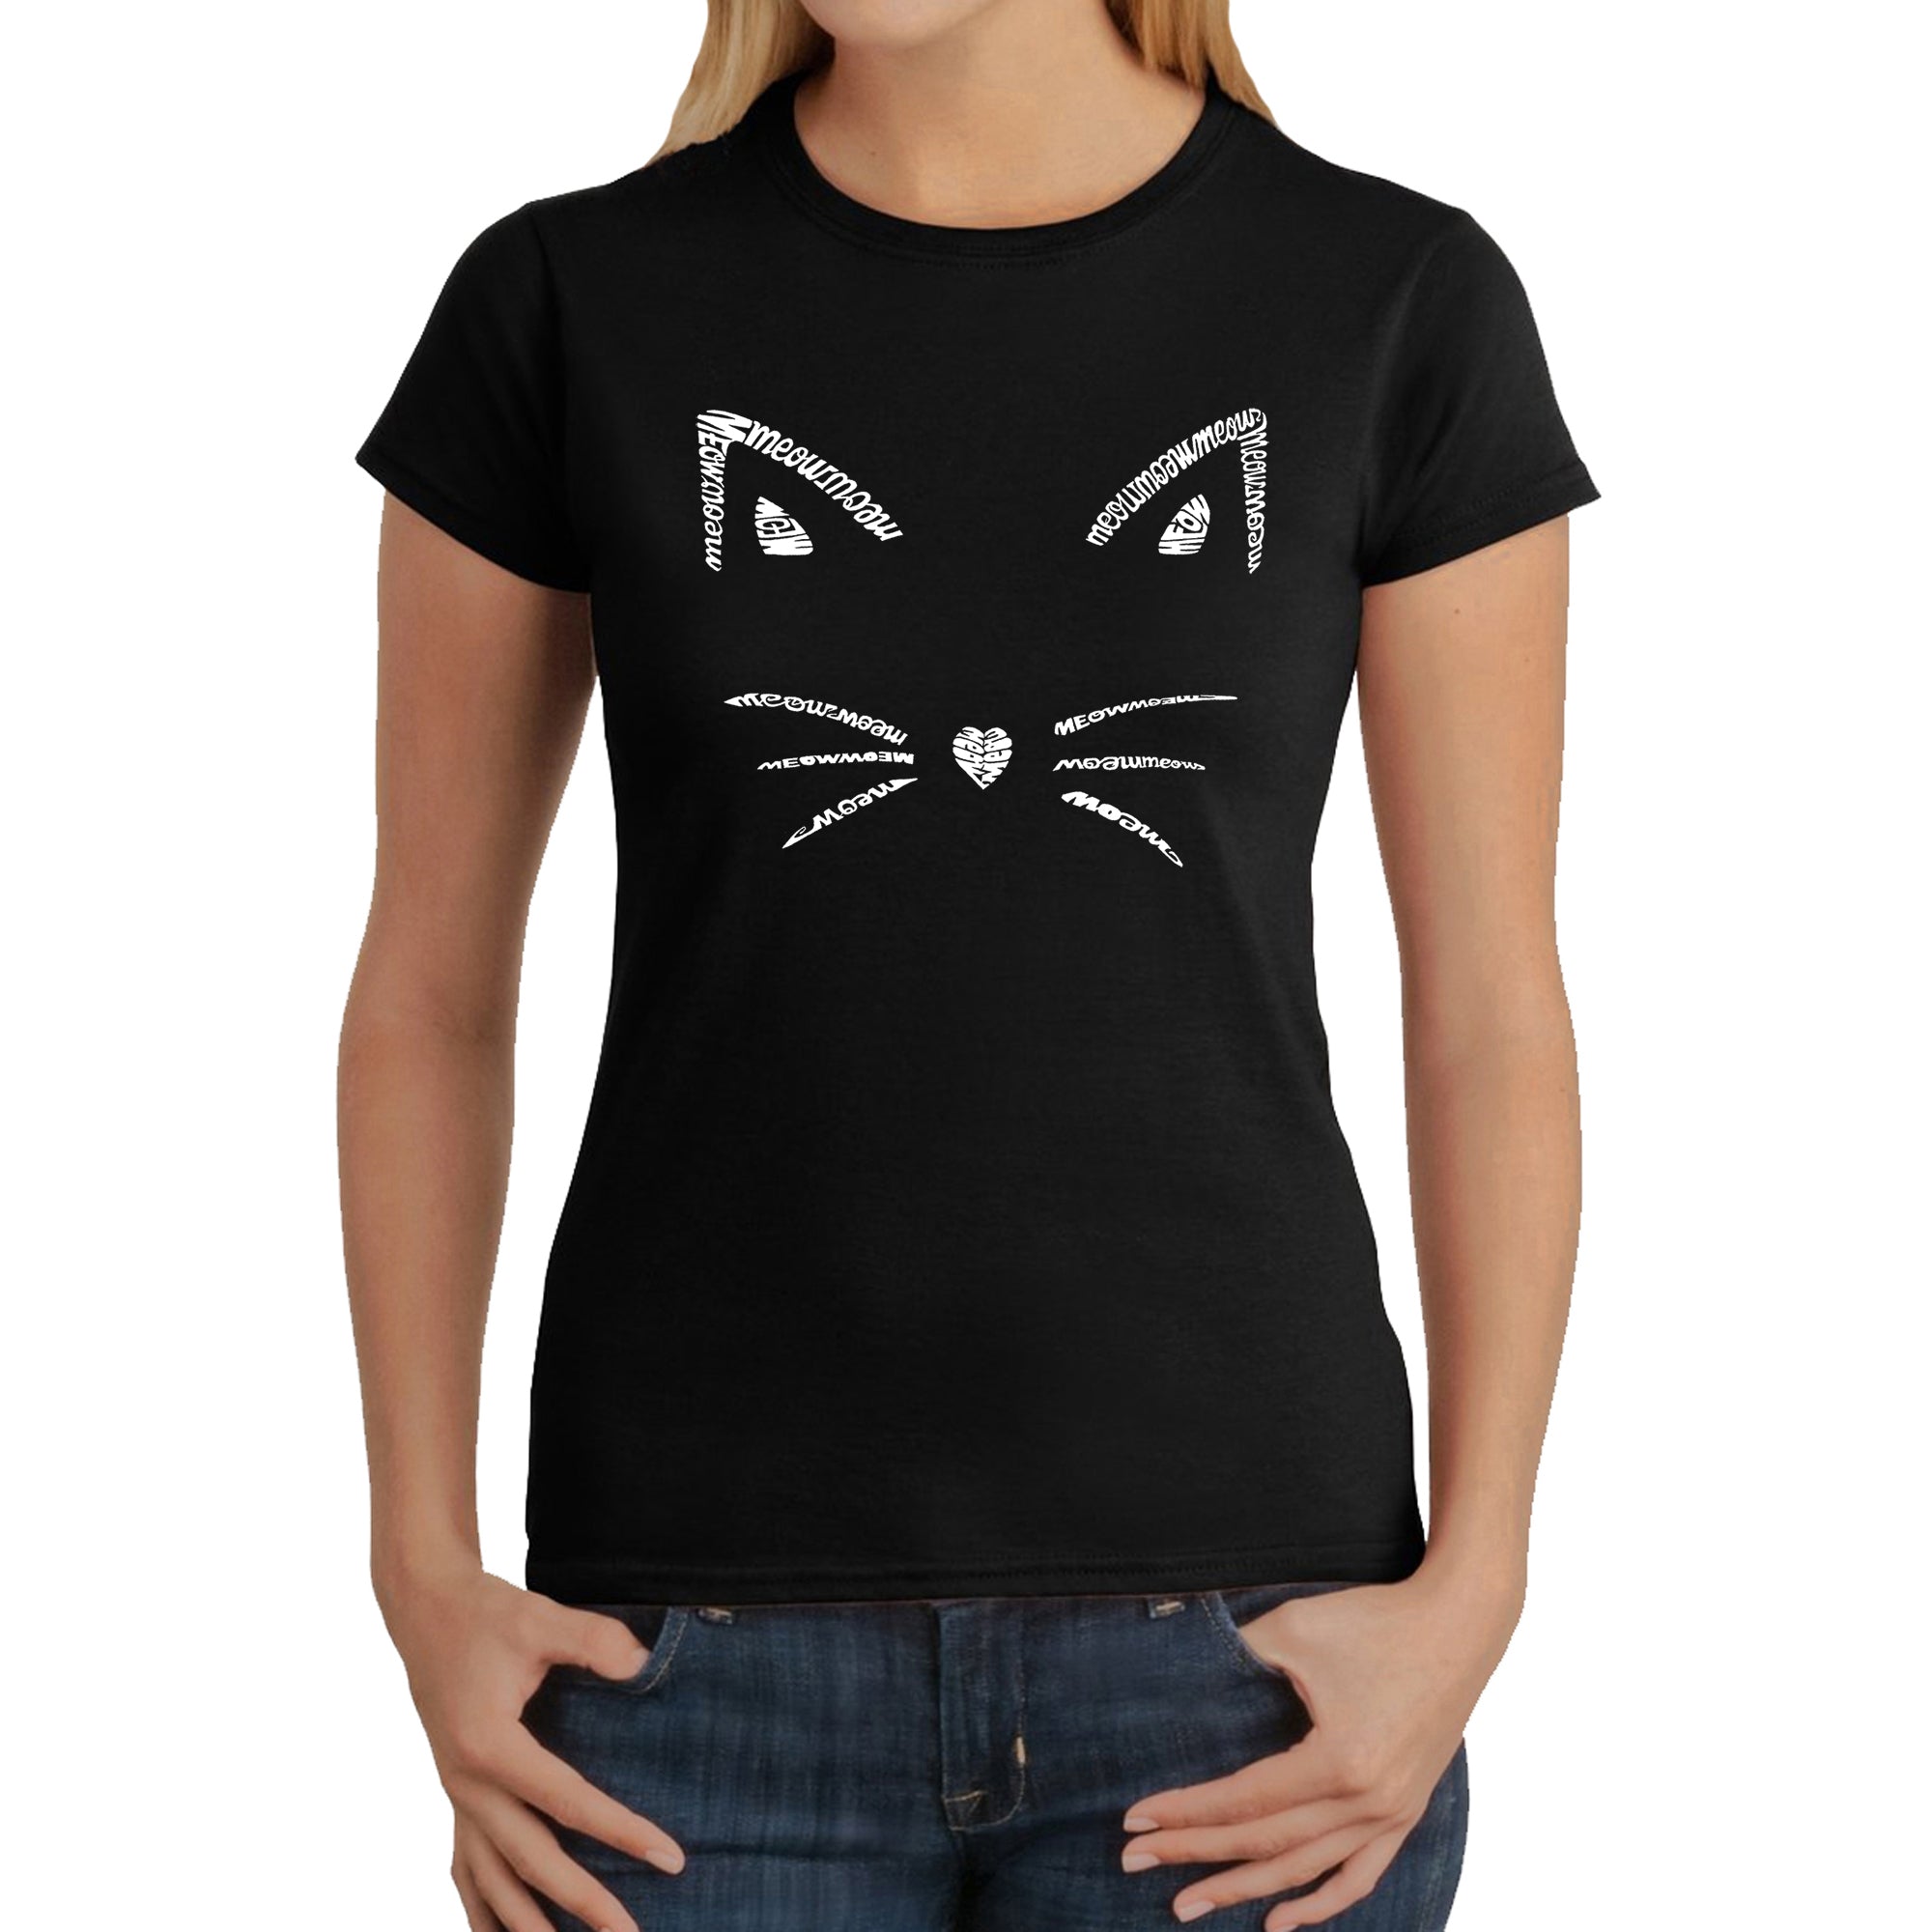 Whiskers - Women's Word Art T-Shirt - Grey - XS